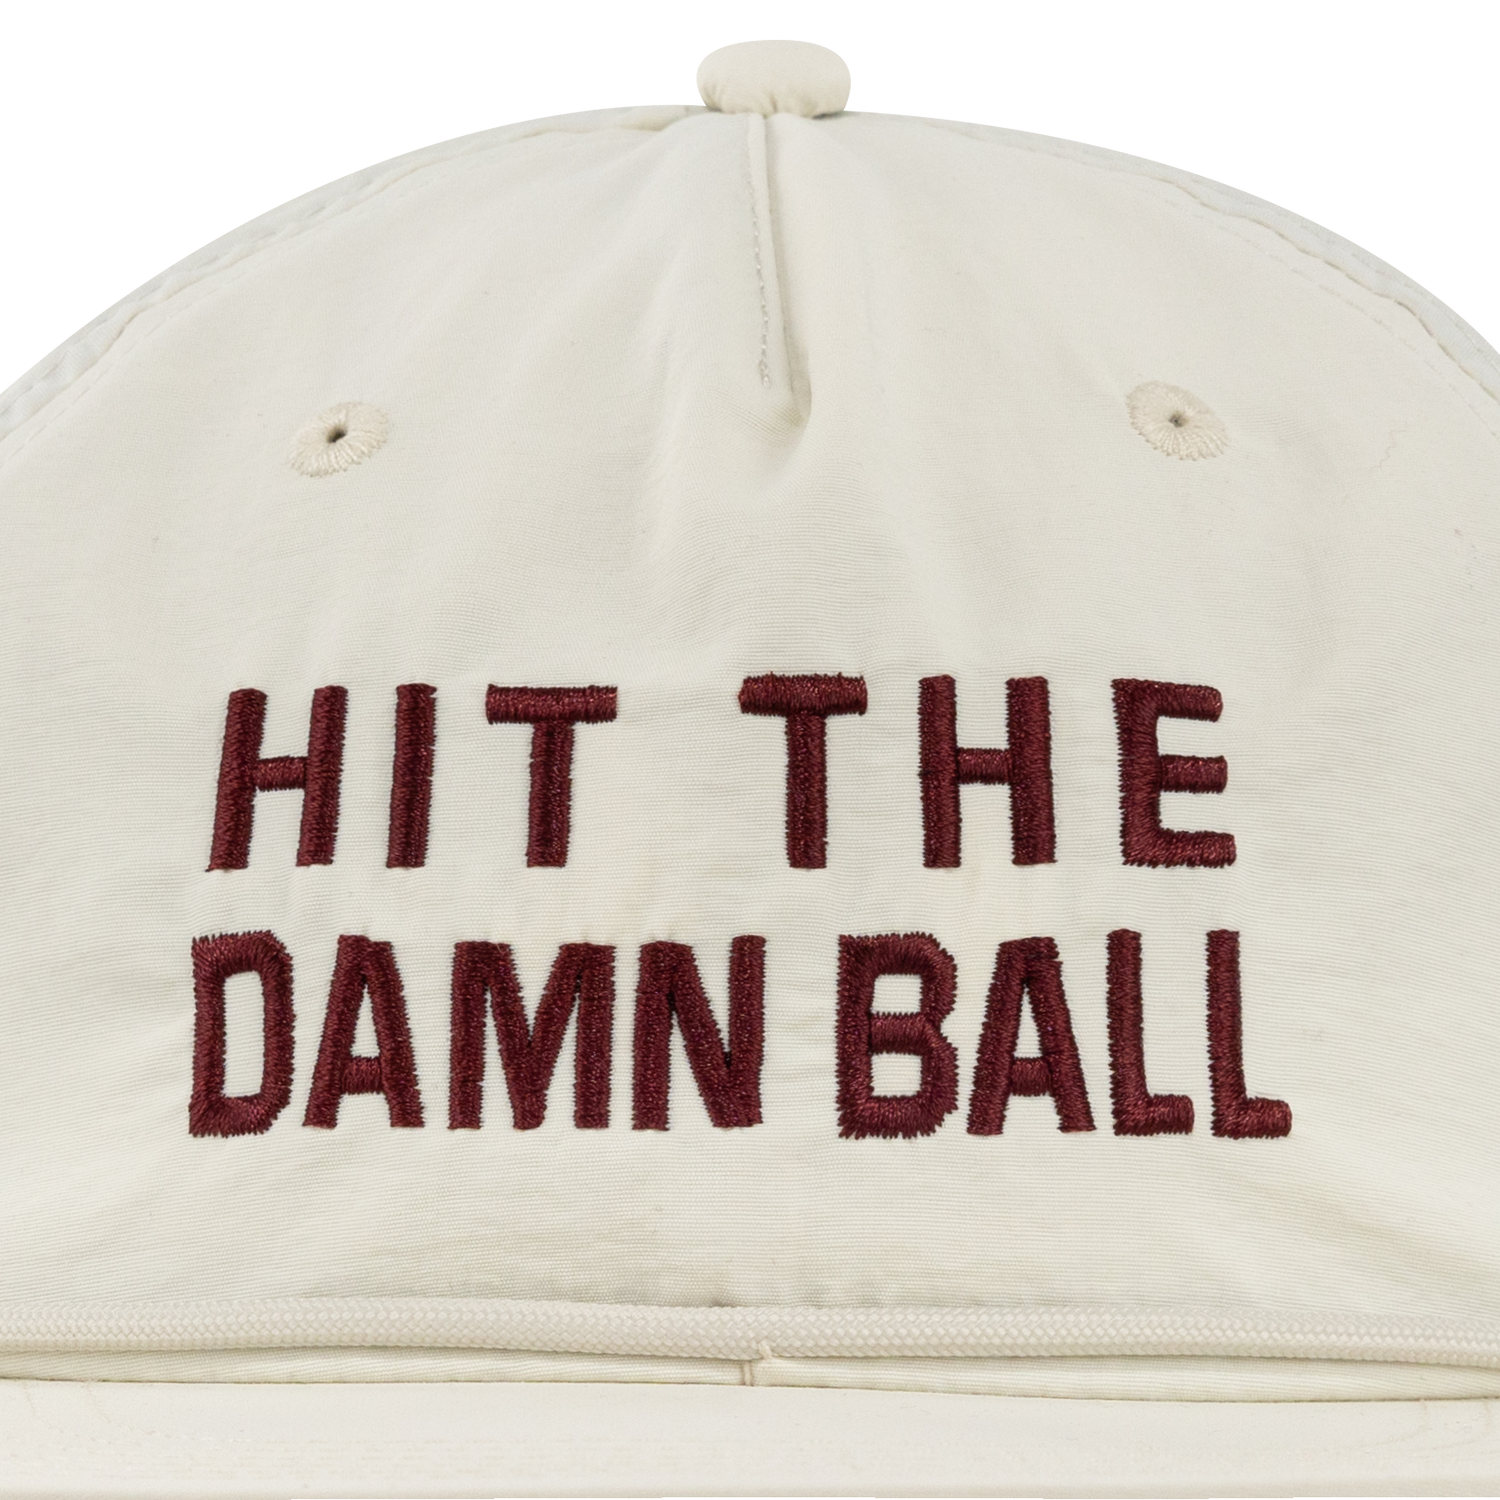 Texas A&M Hit the Damn Ball Chill Hat